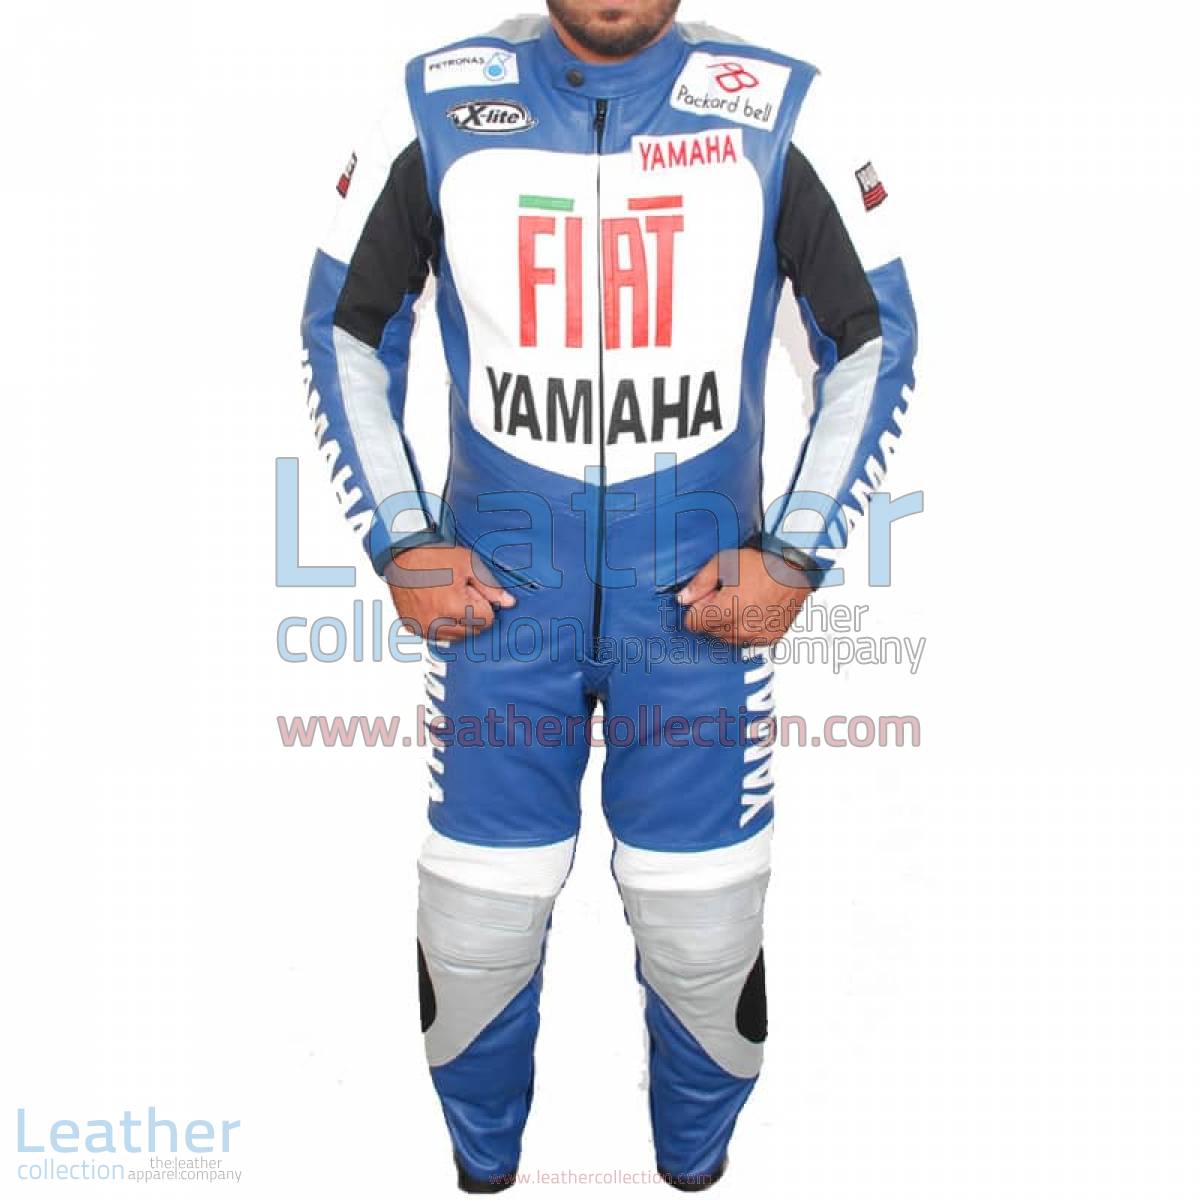 Yamaha FIAT Motorcycle Racing Leather Suit | yamaha fiat